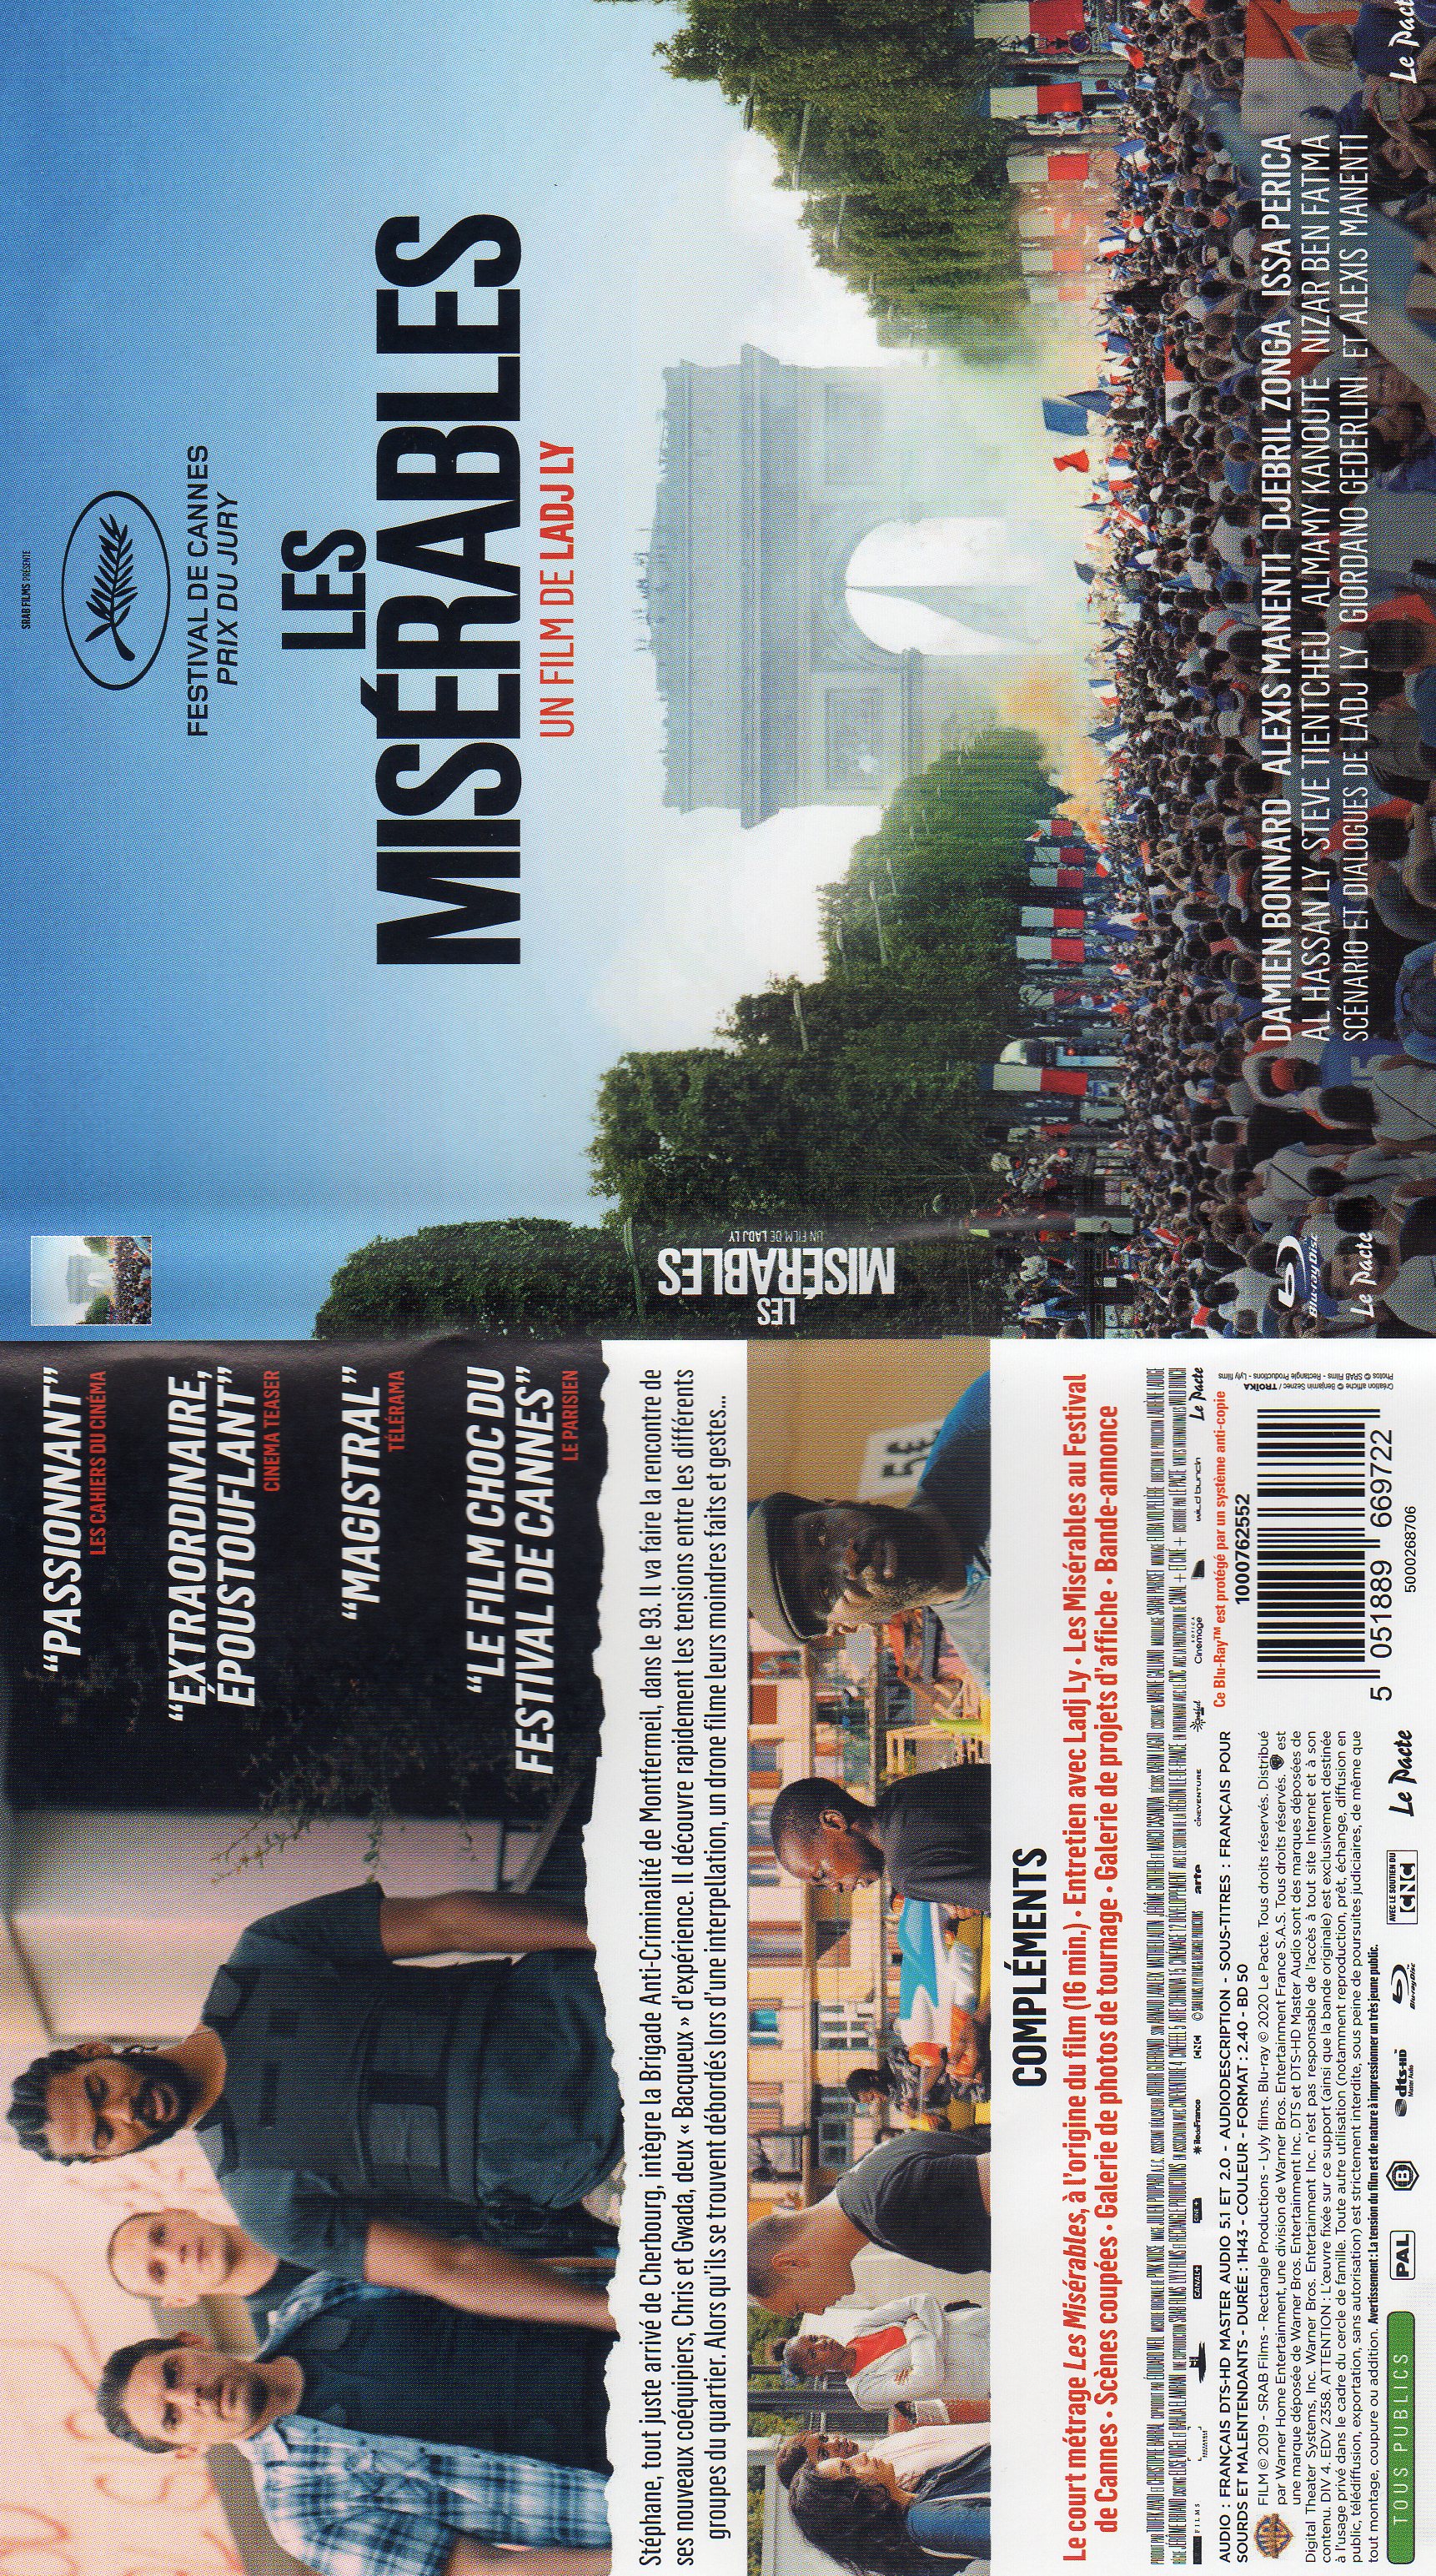 Jaquette DVD Les miserables 2019 (BLU-RAY)